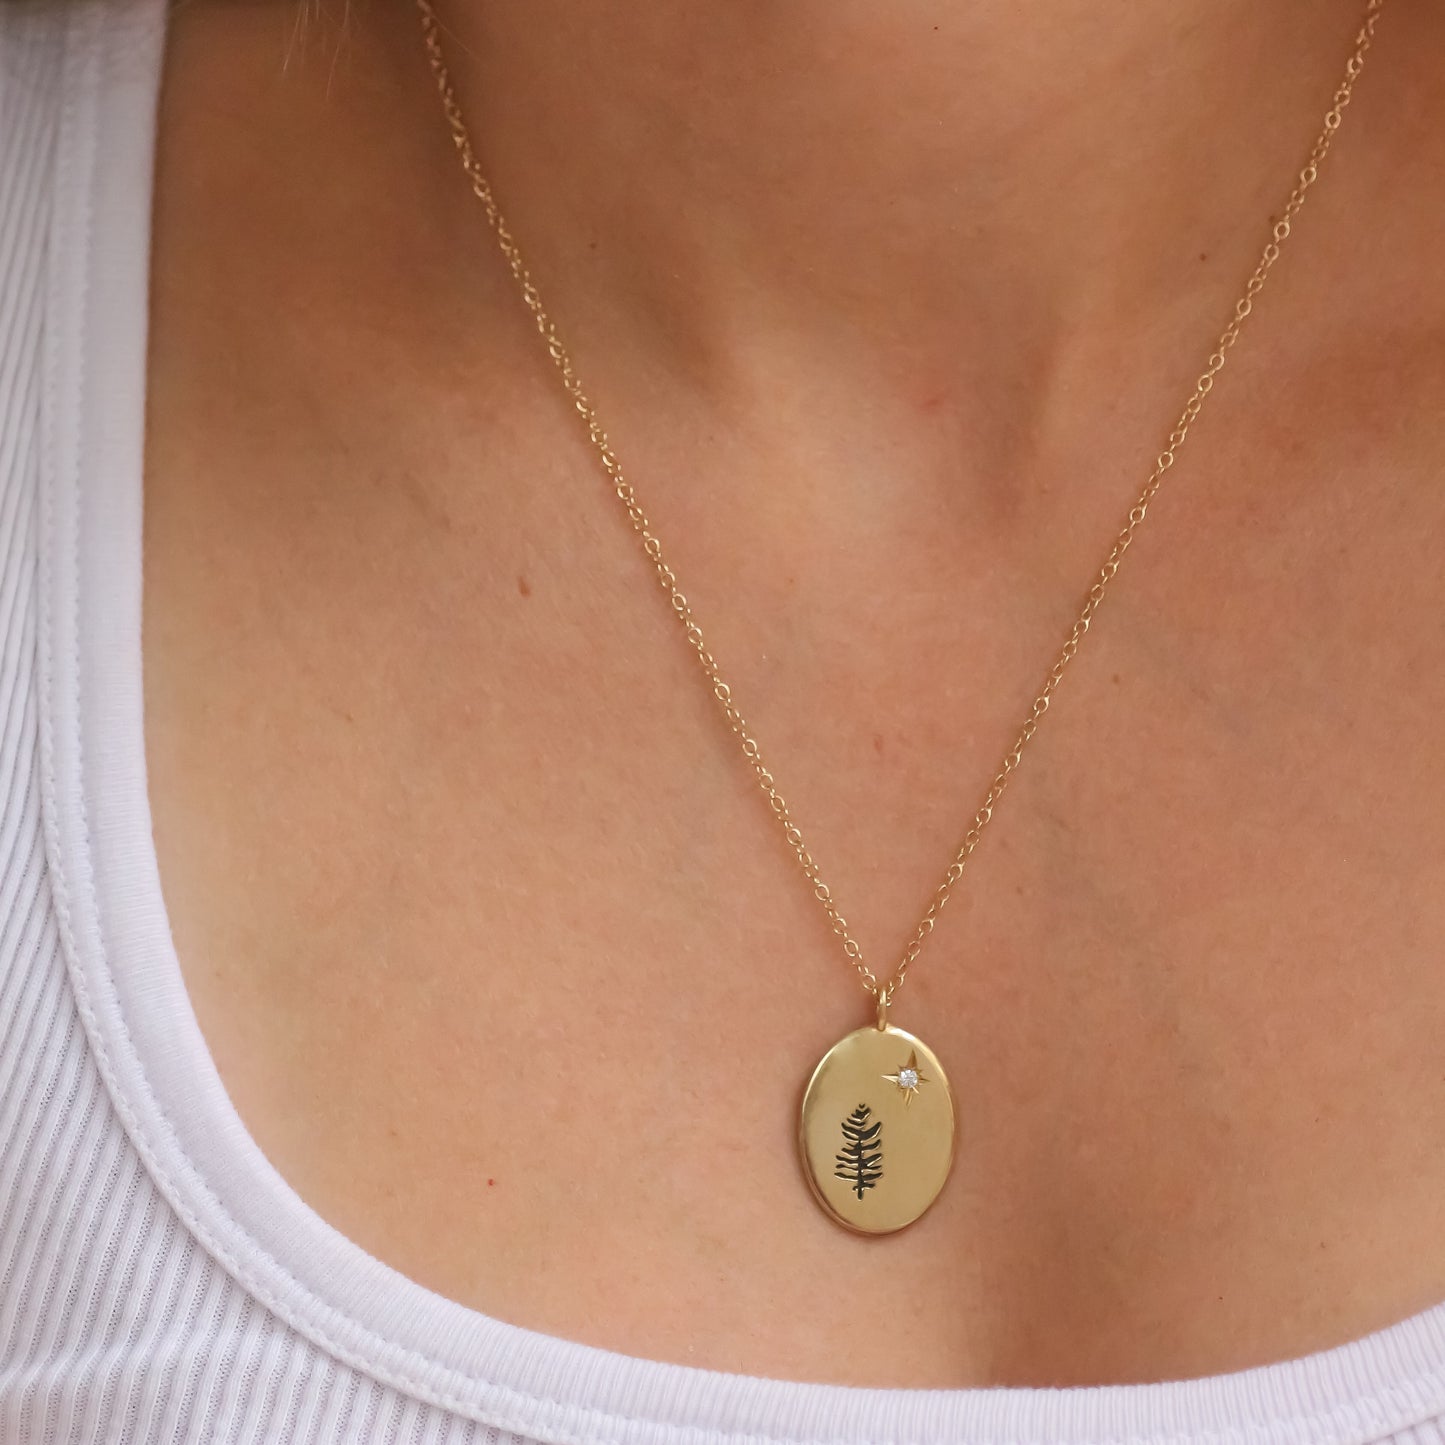 Moonlight necklace 14k gold